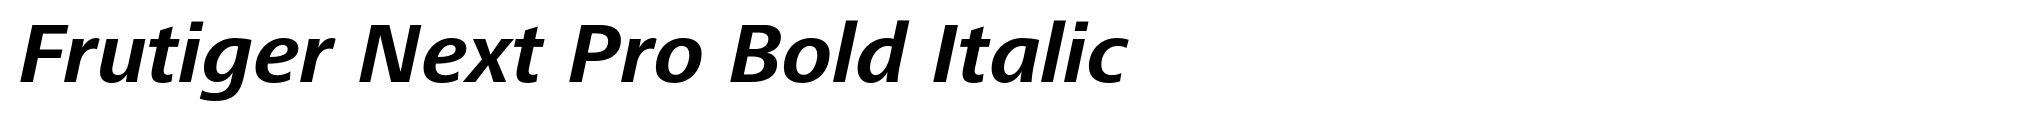 Frutiger Next Pro Bold Italic image